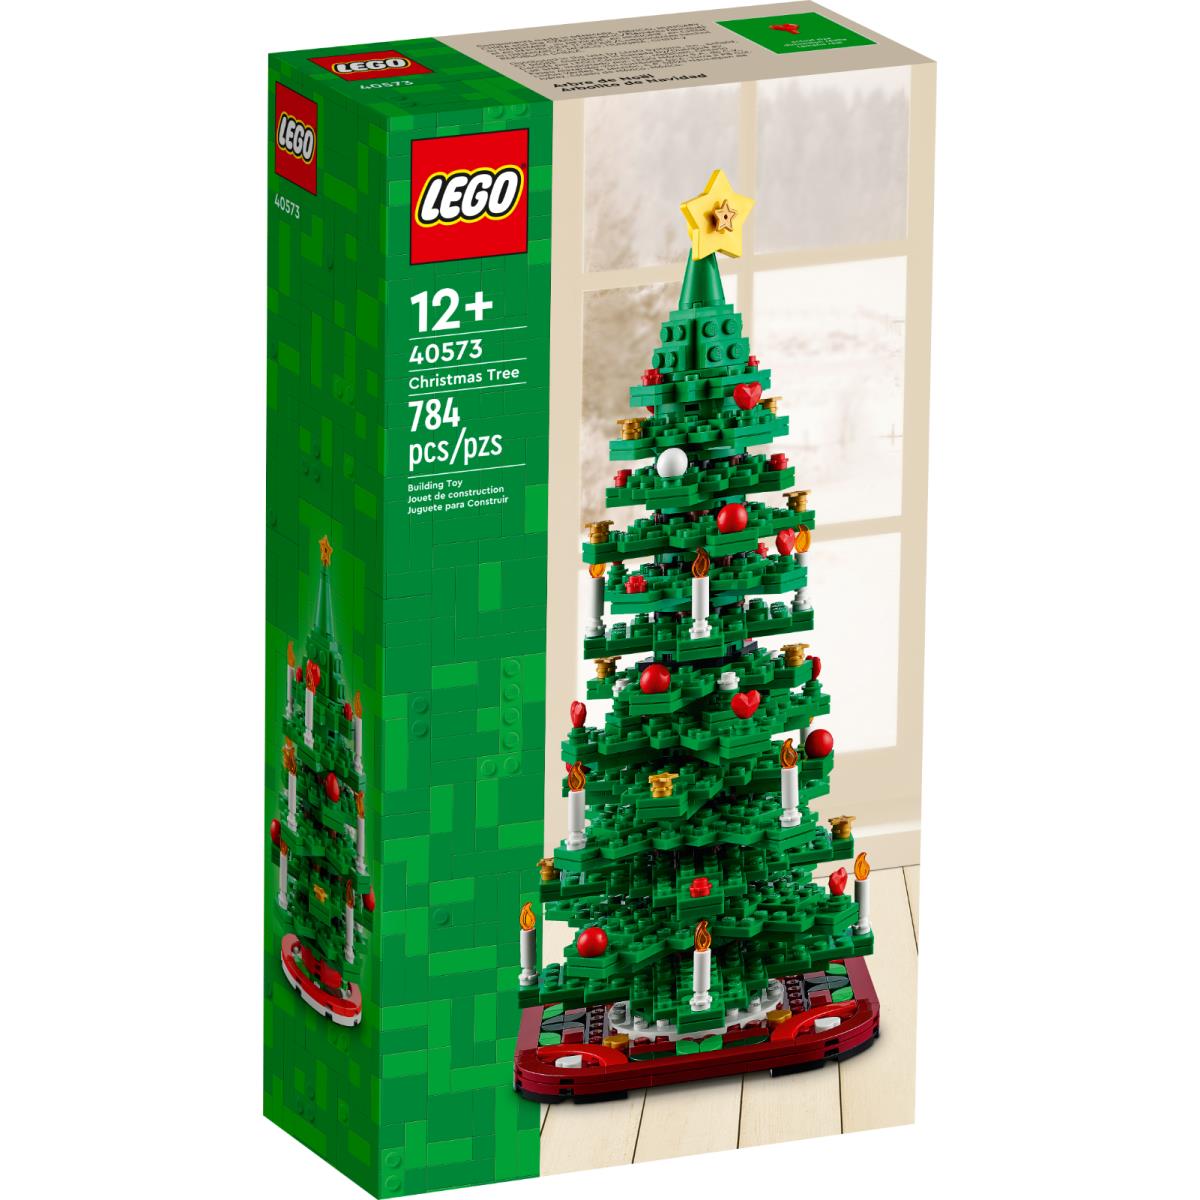 Lego 40573 2-in-1 Christmas Tree Perfect Box Guarantee